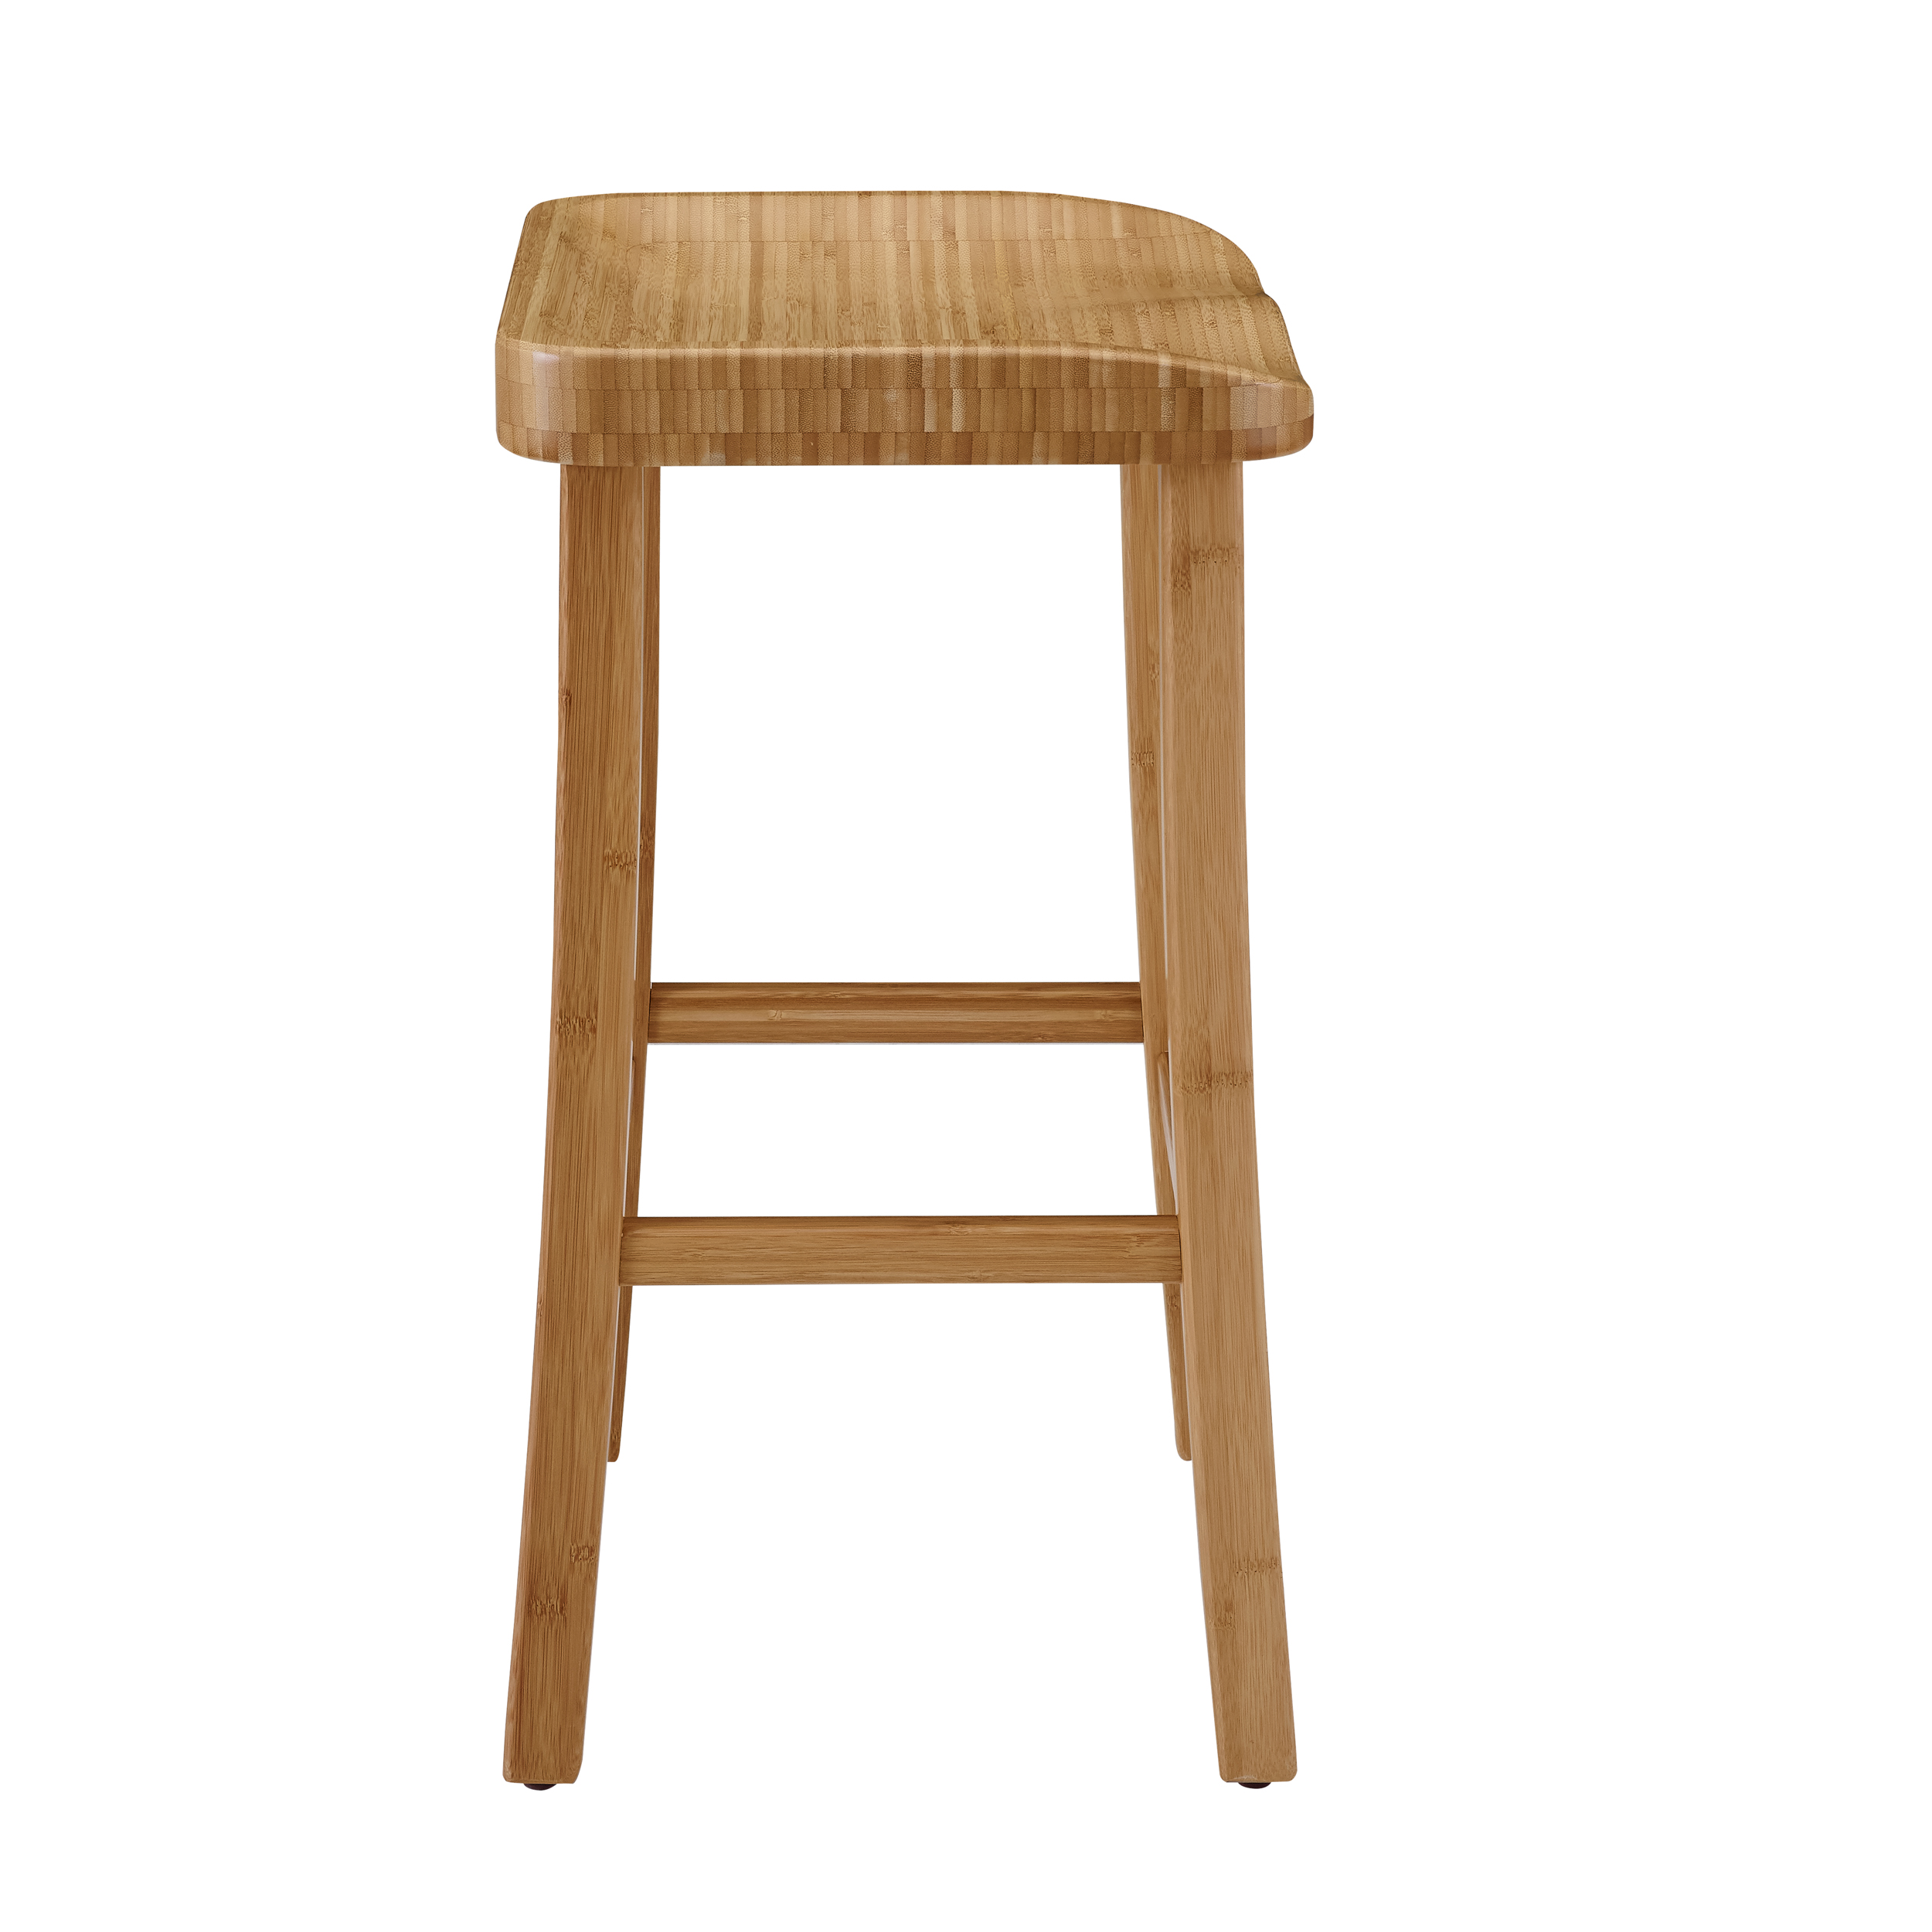 Side Profile of bamboo stool